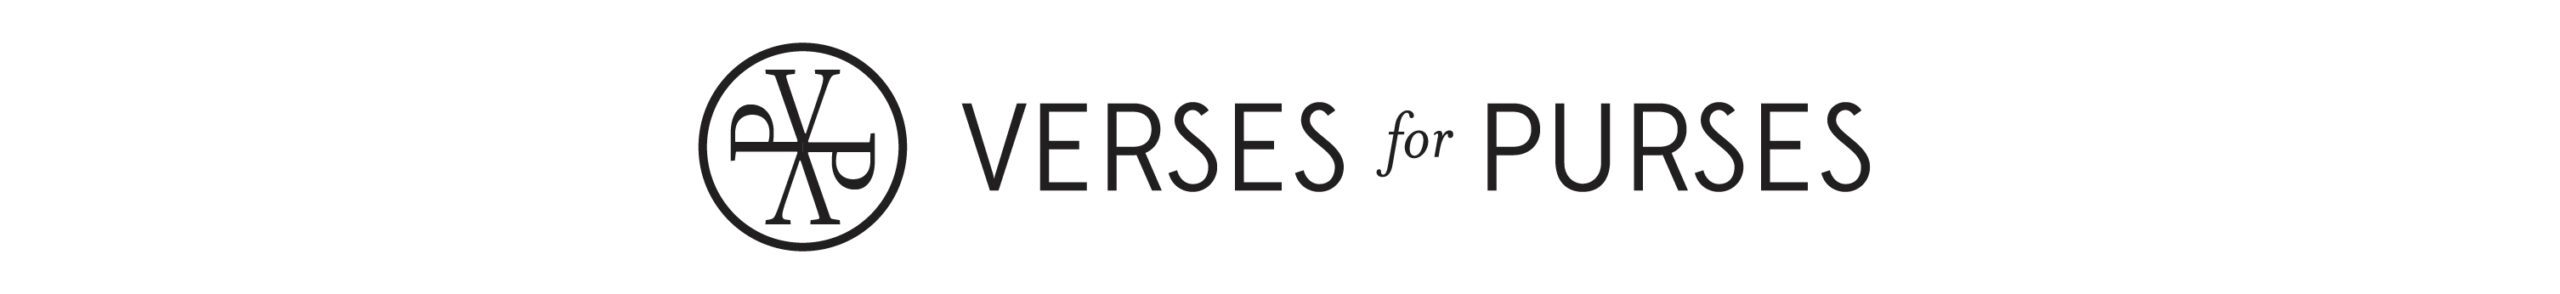 Verses for Purses Logo